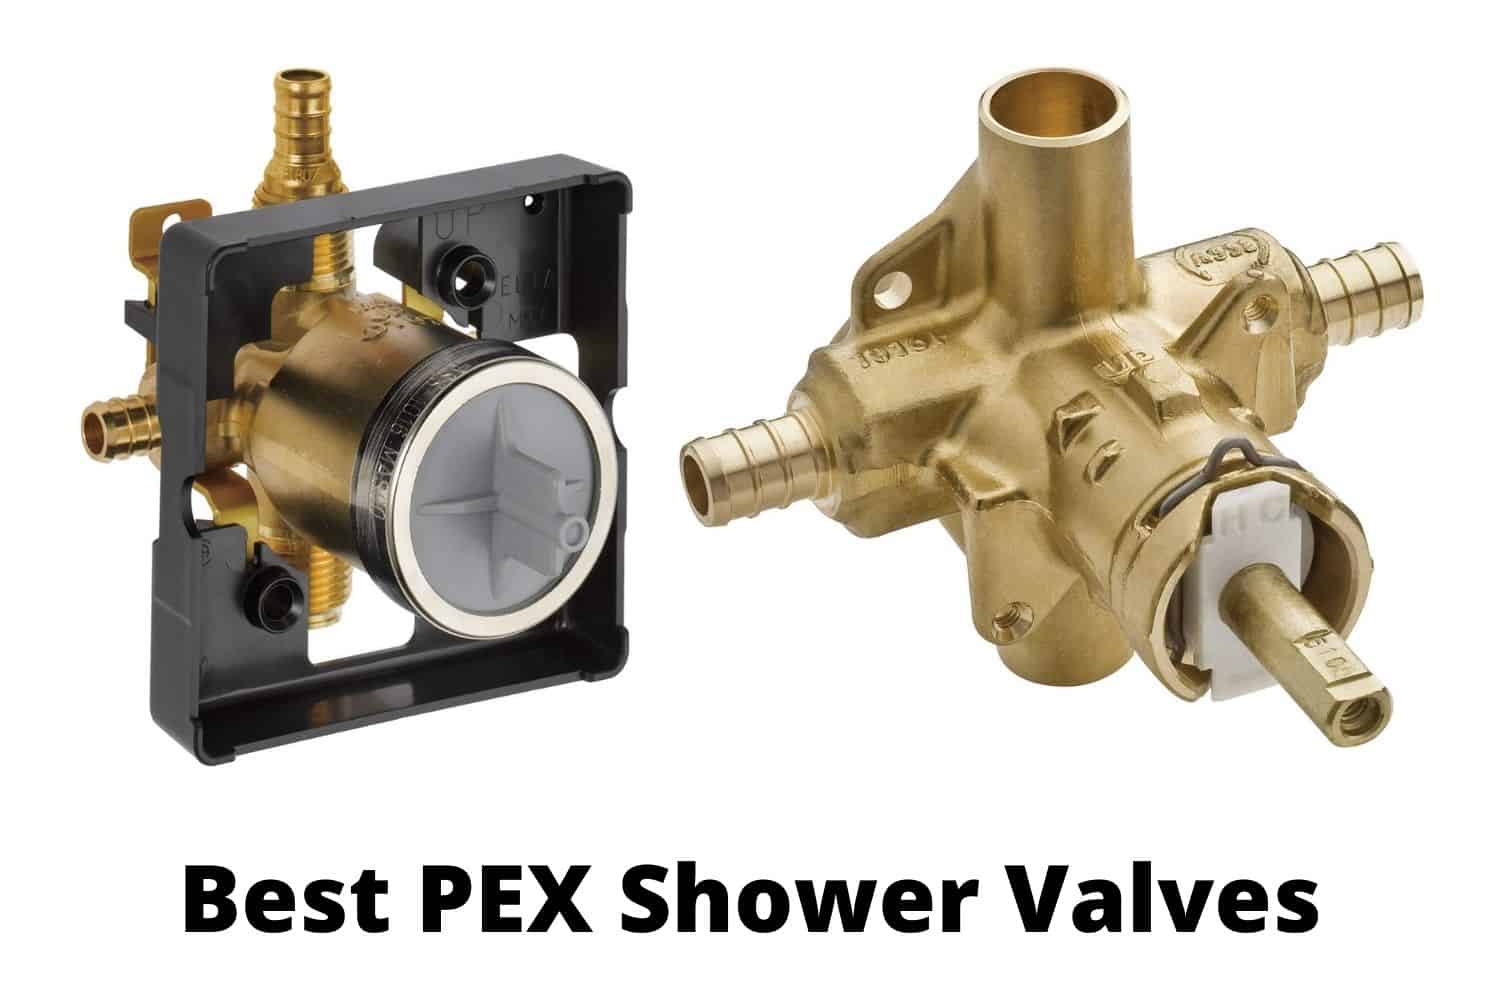 Top PEX Shower Valves